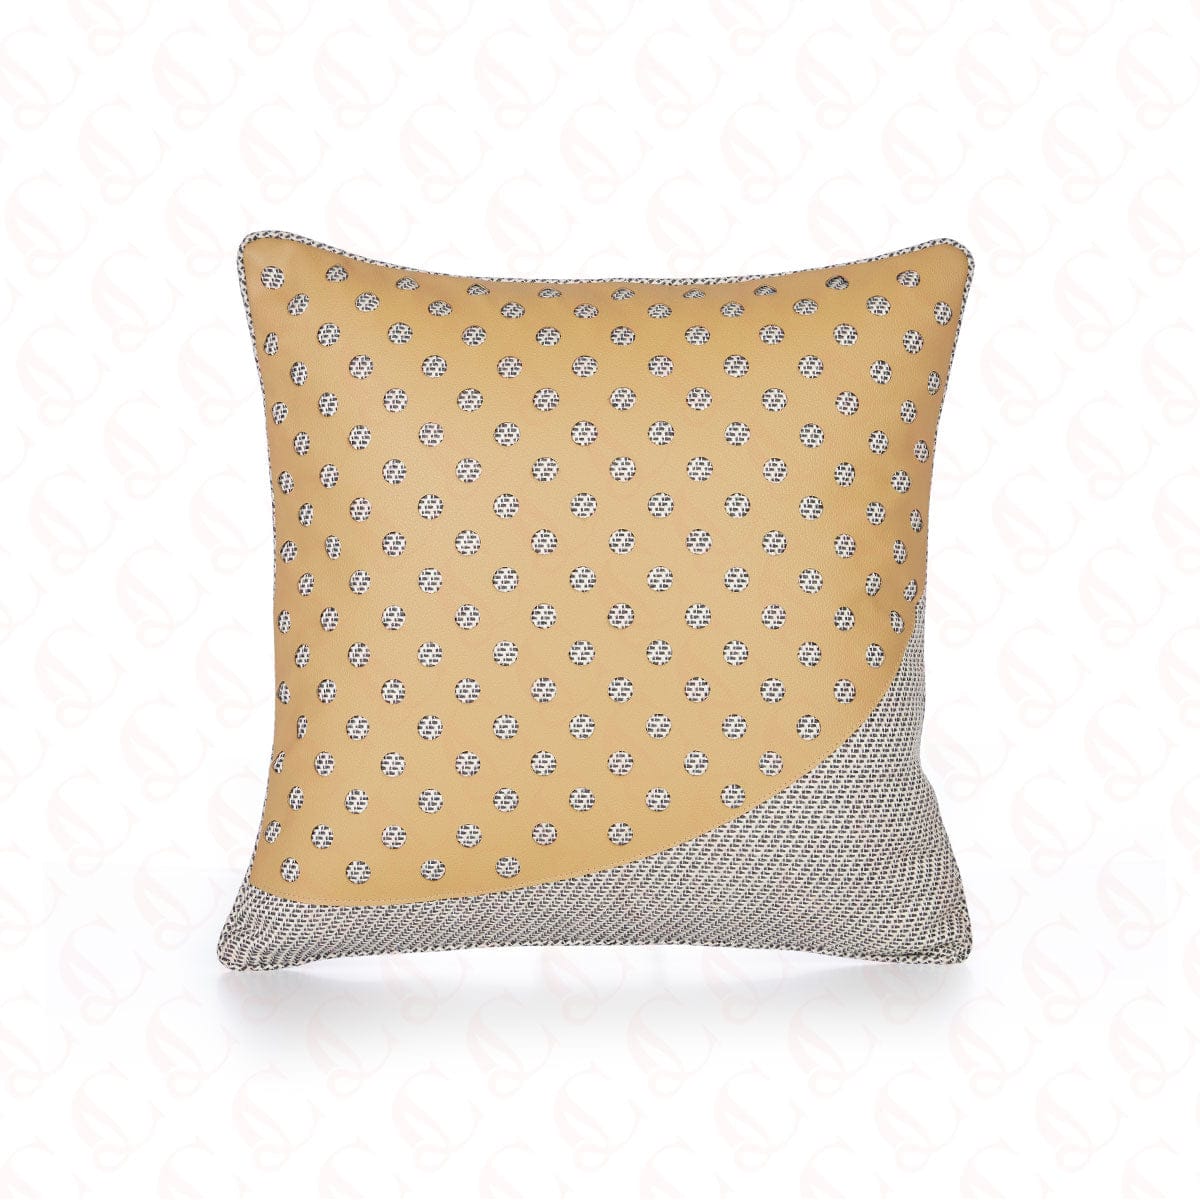 Stipple Textured Cushion Cover